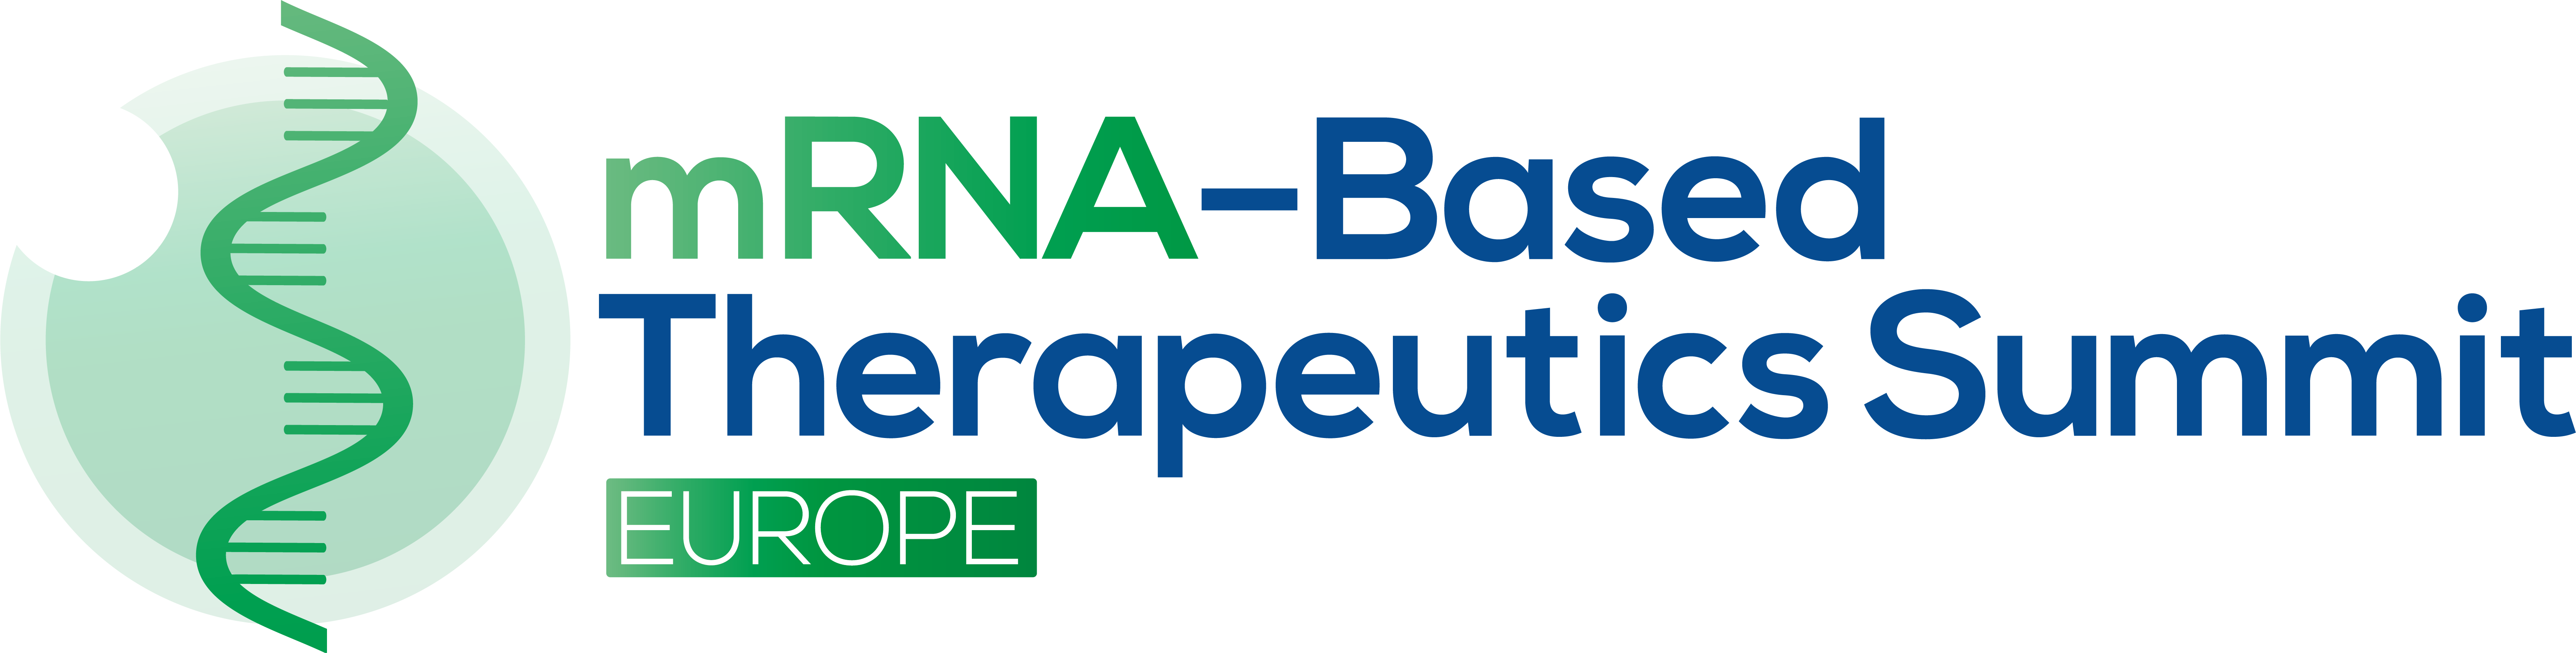 mRNA Based Therapeutics Summit Europe Styde Research LLC